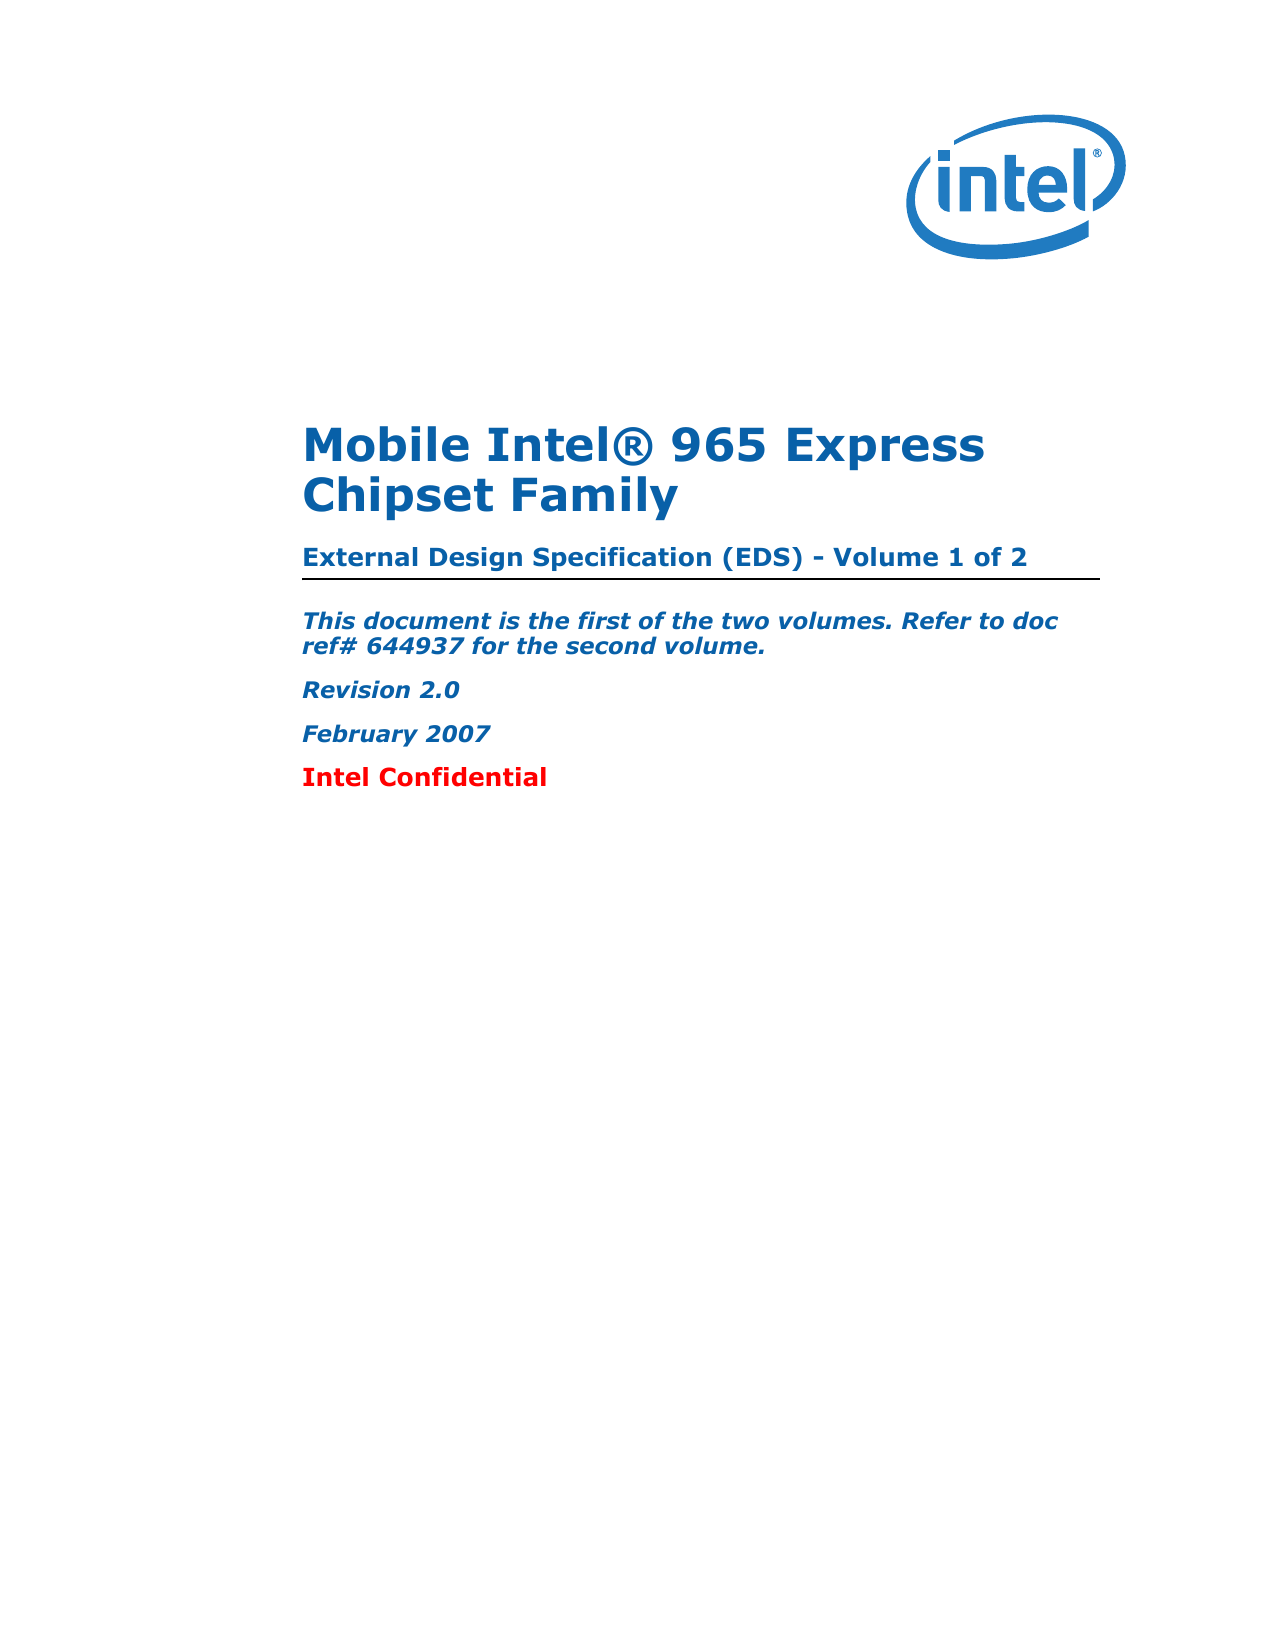 mobile intel 965 express chipset family windows 7 32-bit driver